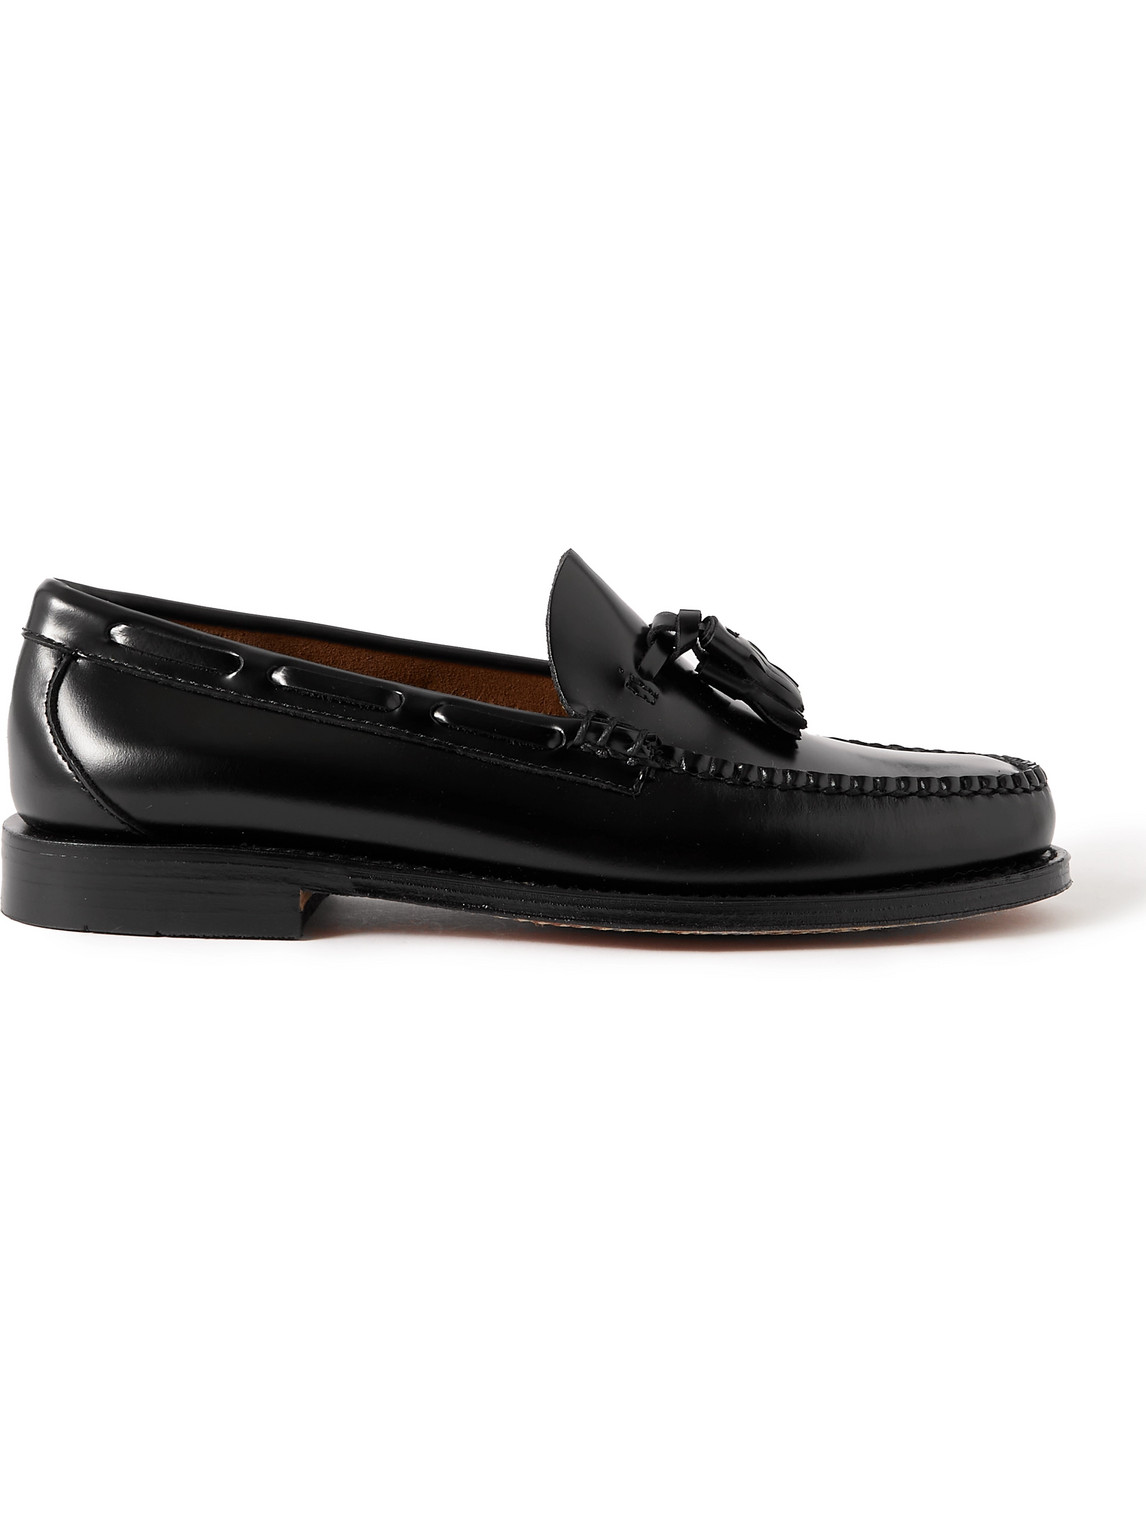 G.H. Bass & Co. - Weejuns Heritage Larkin Glossed-Leather Tasselled Loafers - Men - Black - UK 8.5 von G.H. Bass & Co.